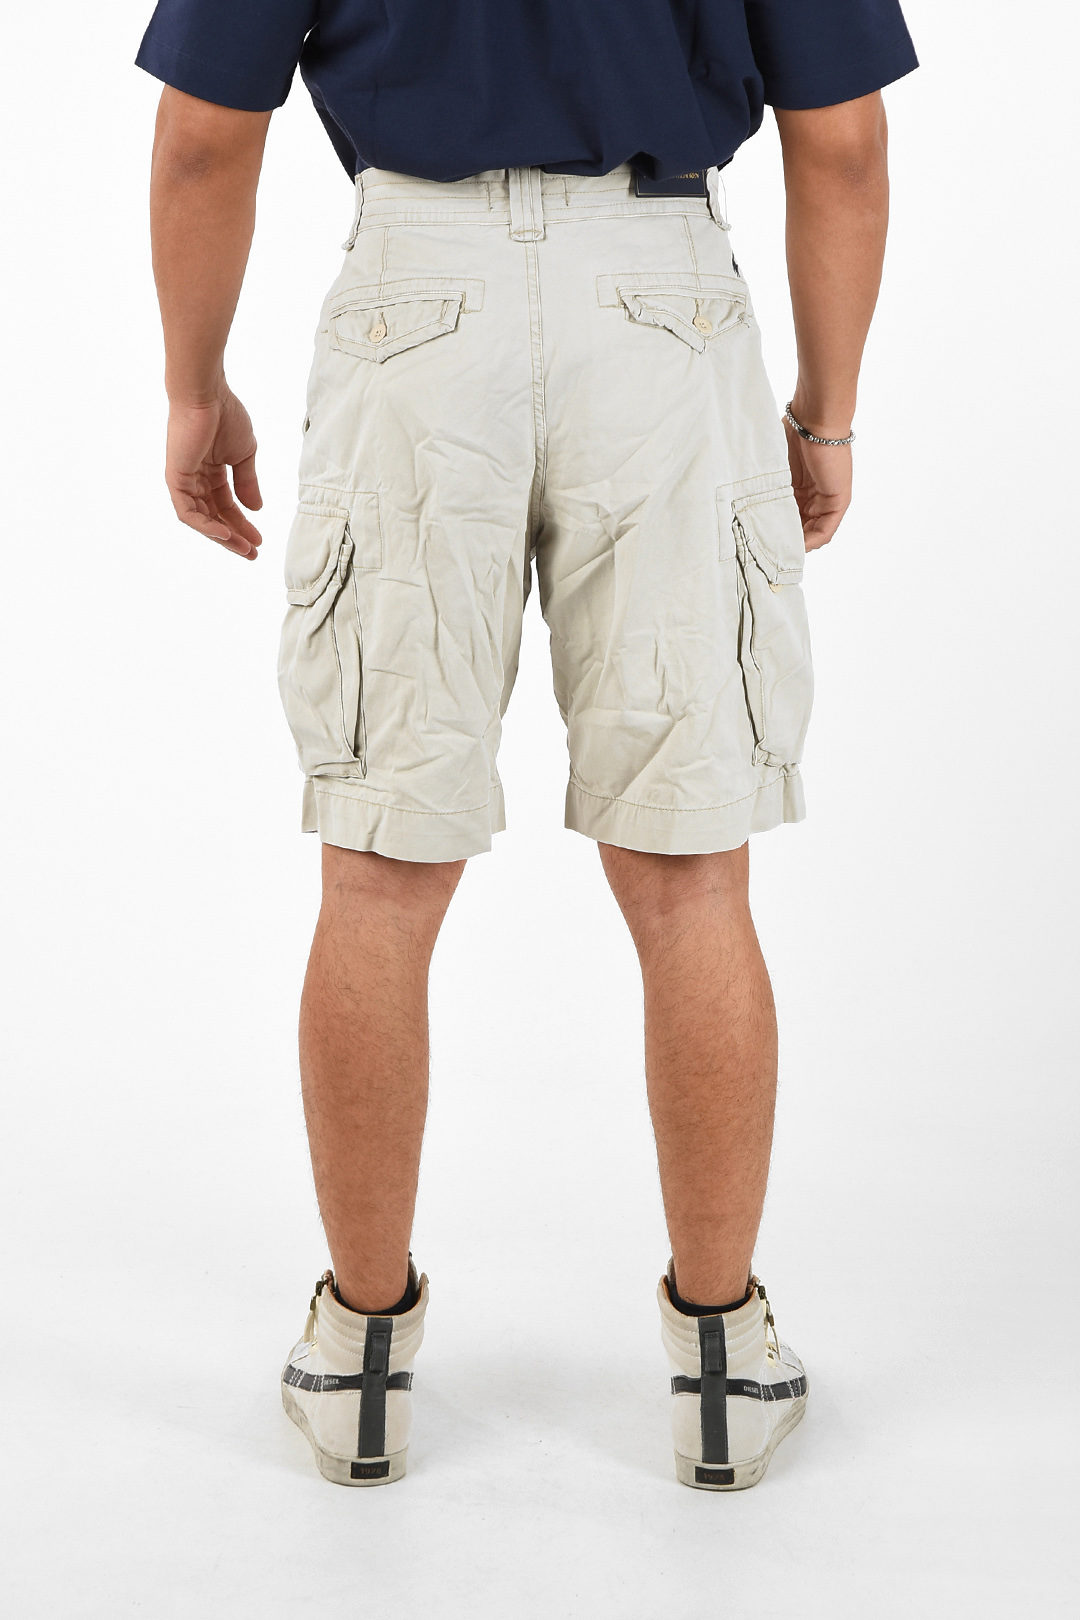 Polo Ralph Lauren cargo shorts men - Glamood Outlet